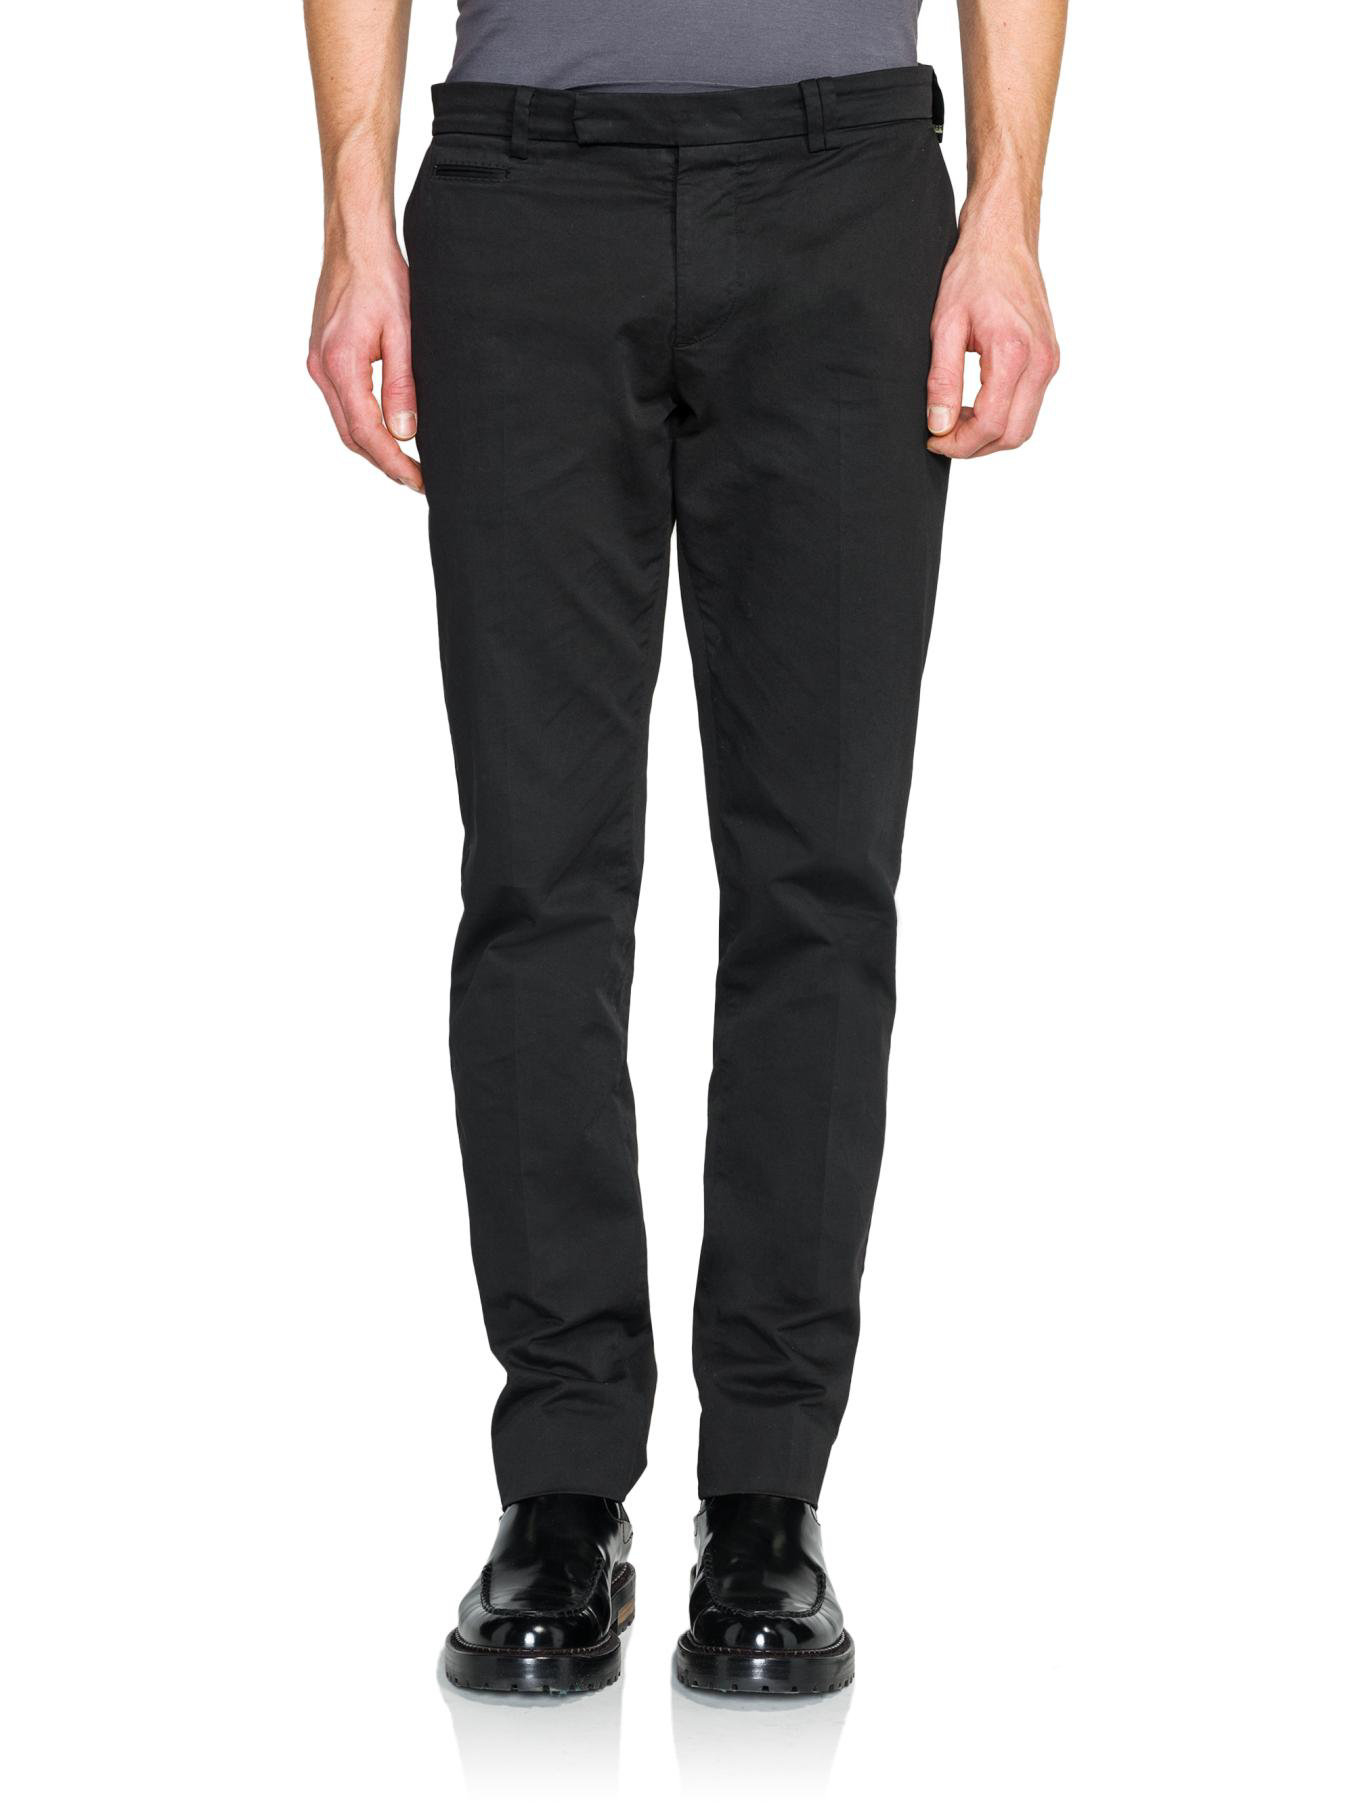 Lyst - Fendi Slim-fit Stretch Cotton Pants in Black for Men